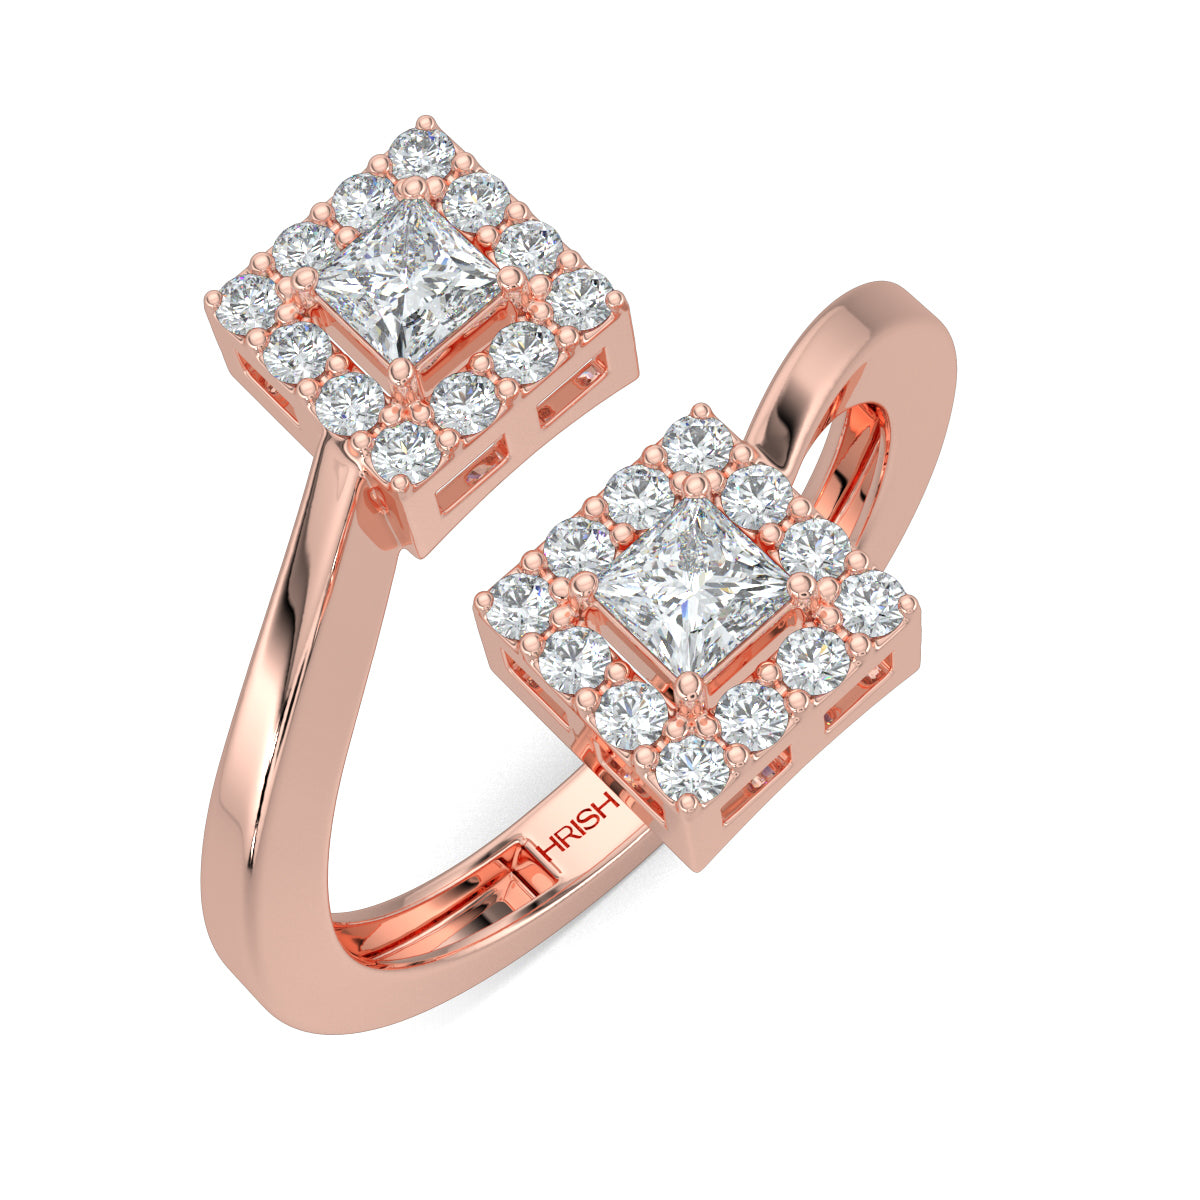 Rose Gold, Diamond Ring, Princess edge diamond ring, natural diamonds, lab-grown diamonds, everyday ring, pave setting, princess diamond, halo setting, bypass band ring, elegant jewelry.